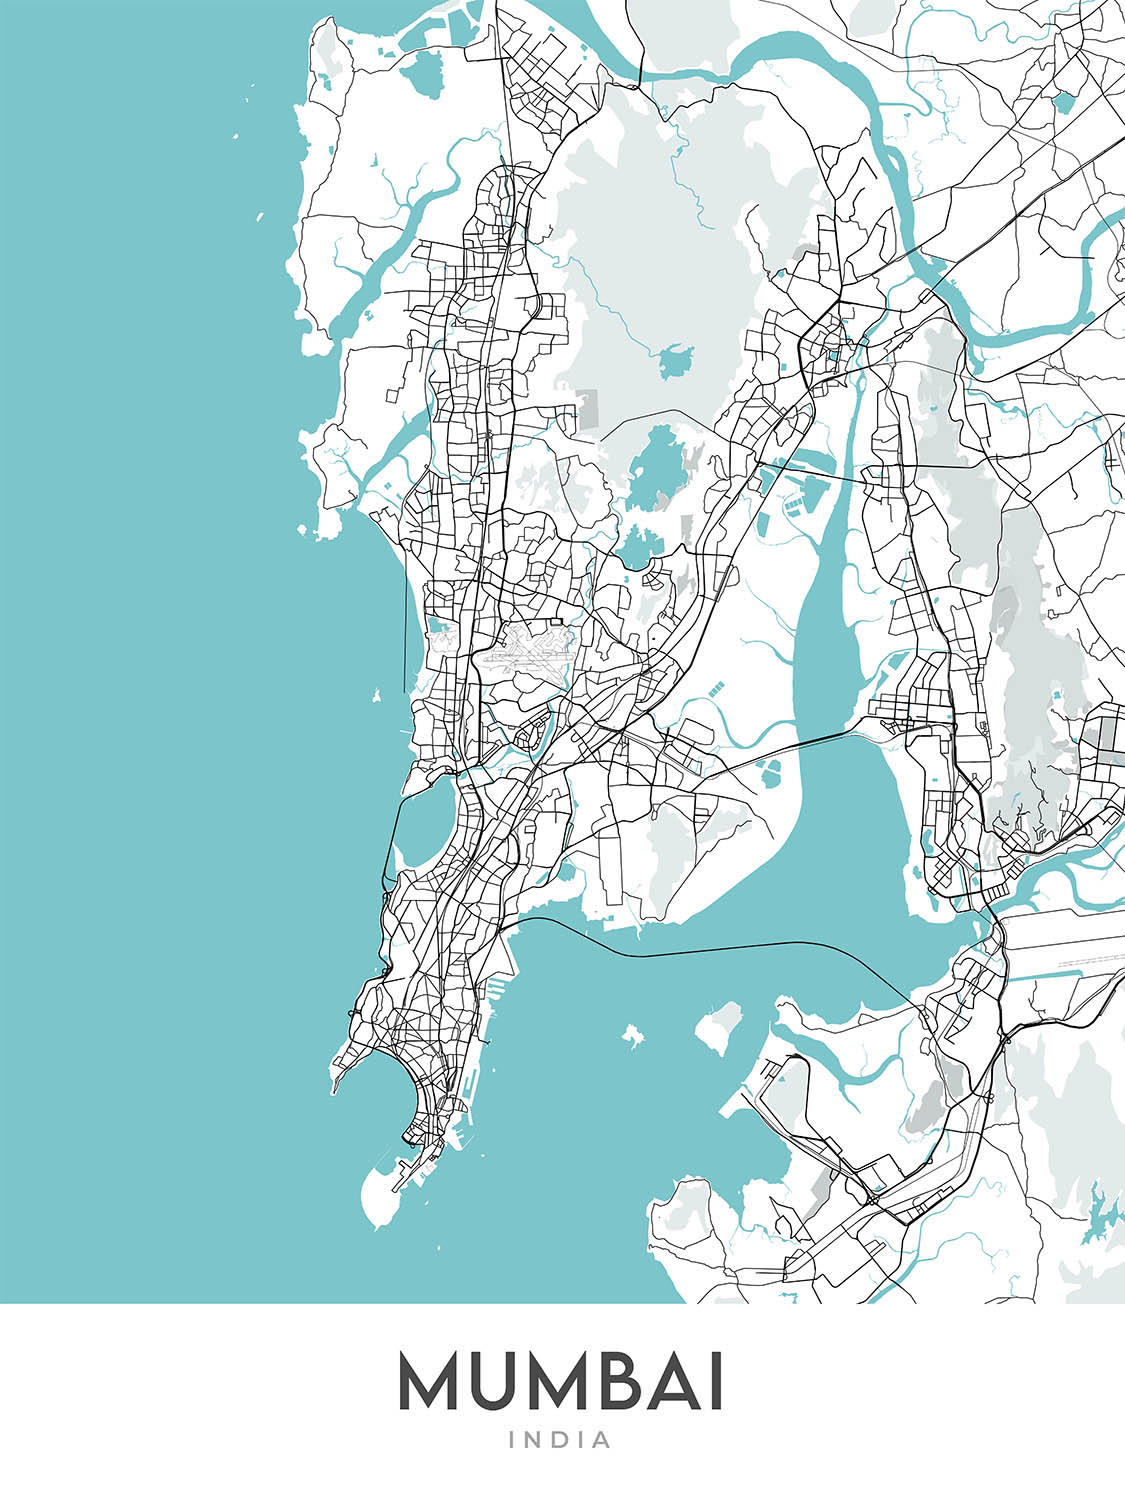 Mapa moderno de la ciudad de Mumbai, India: Colaba, Marine Drive, Bandra-Worli Sea Link, Juhu Beach, Powai Lake